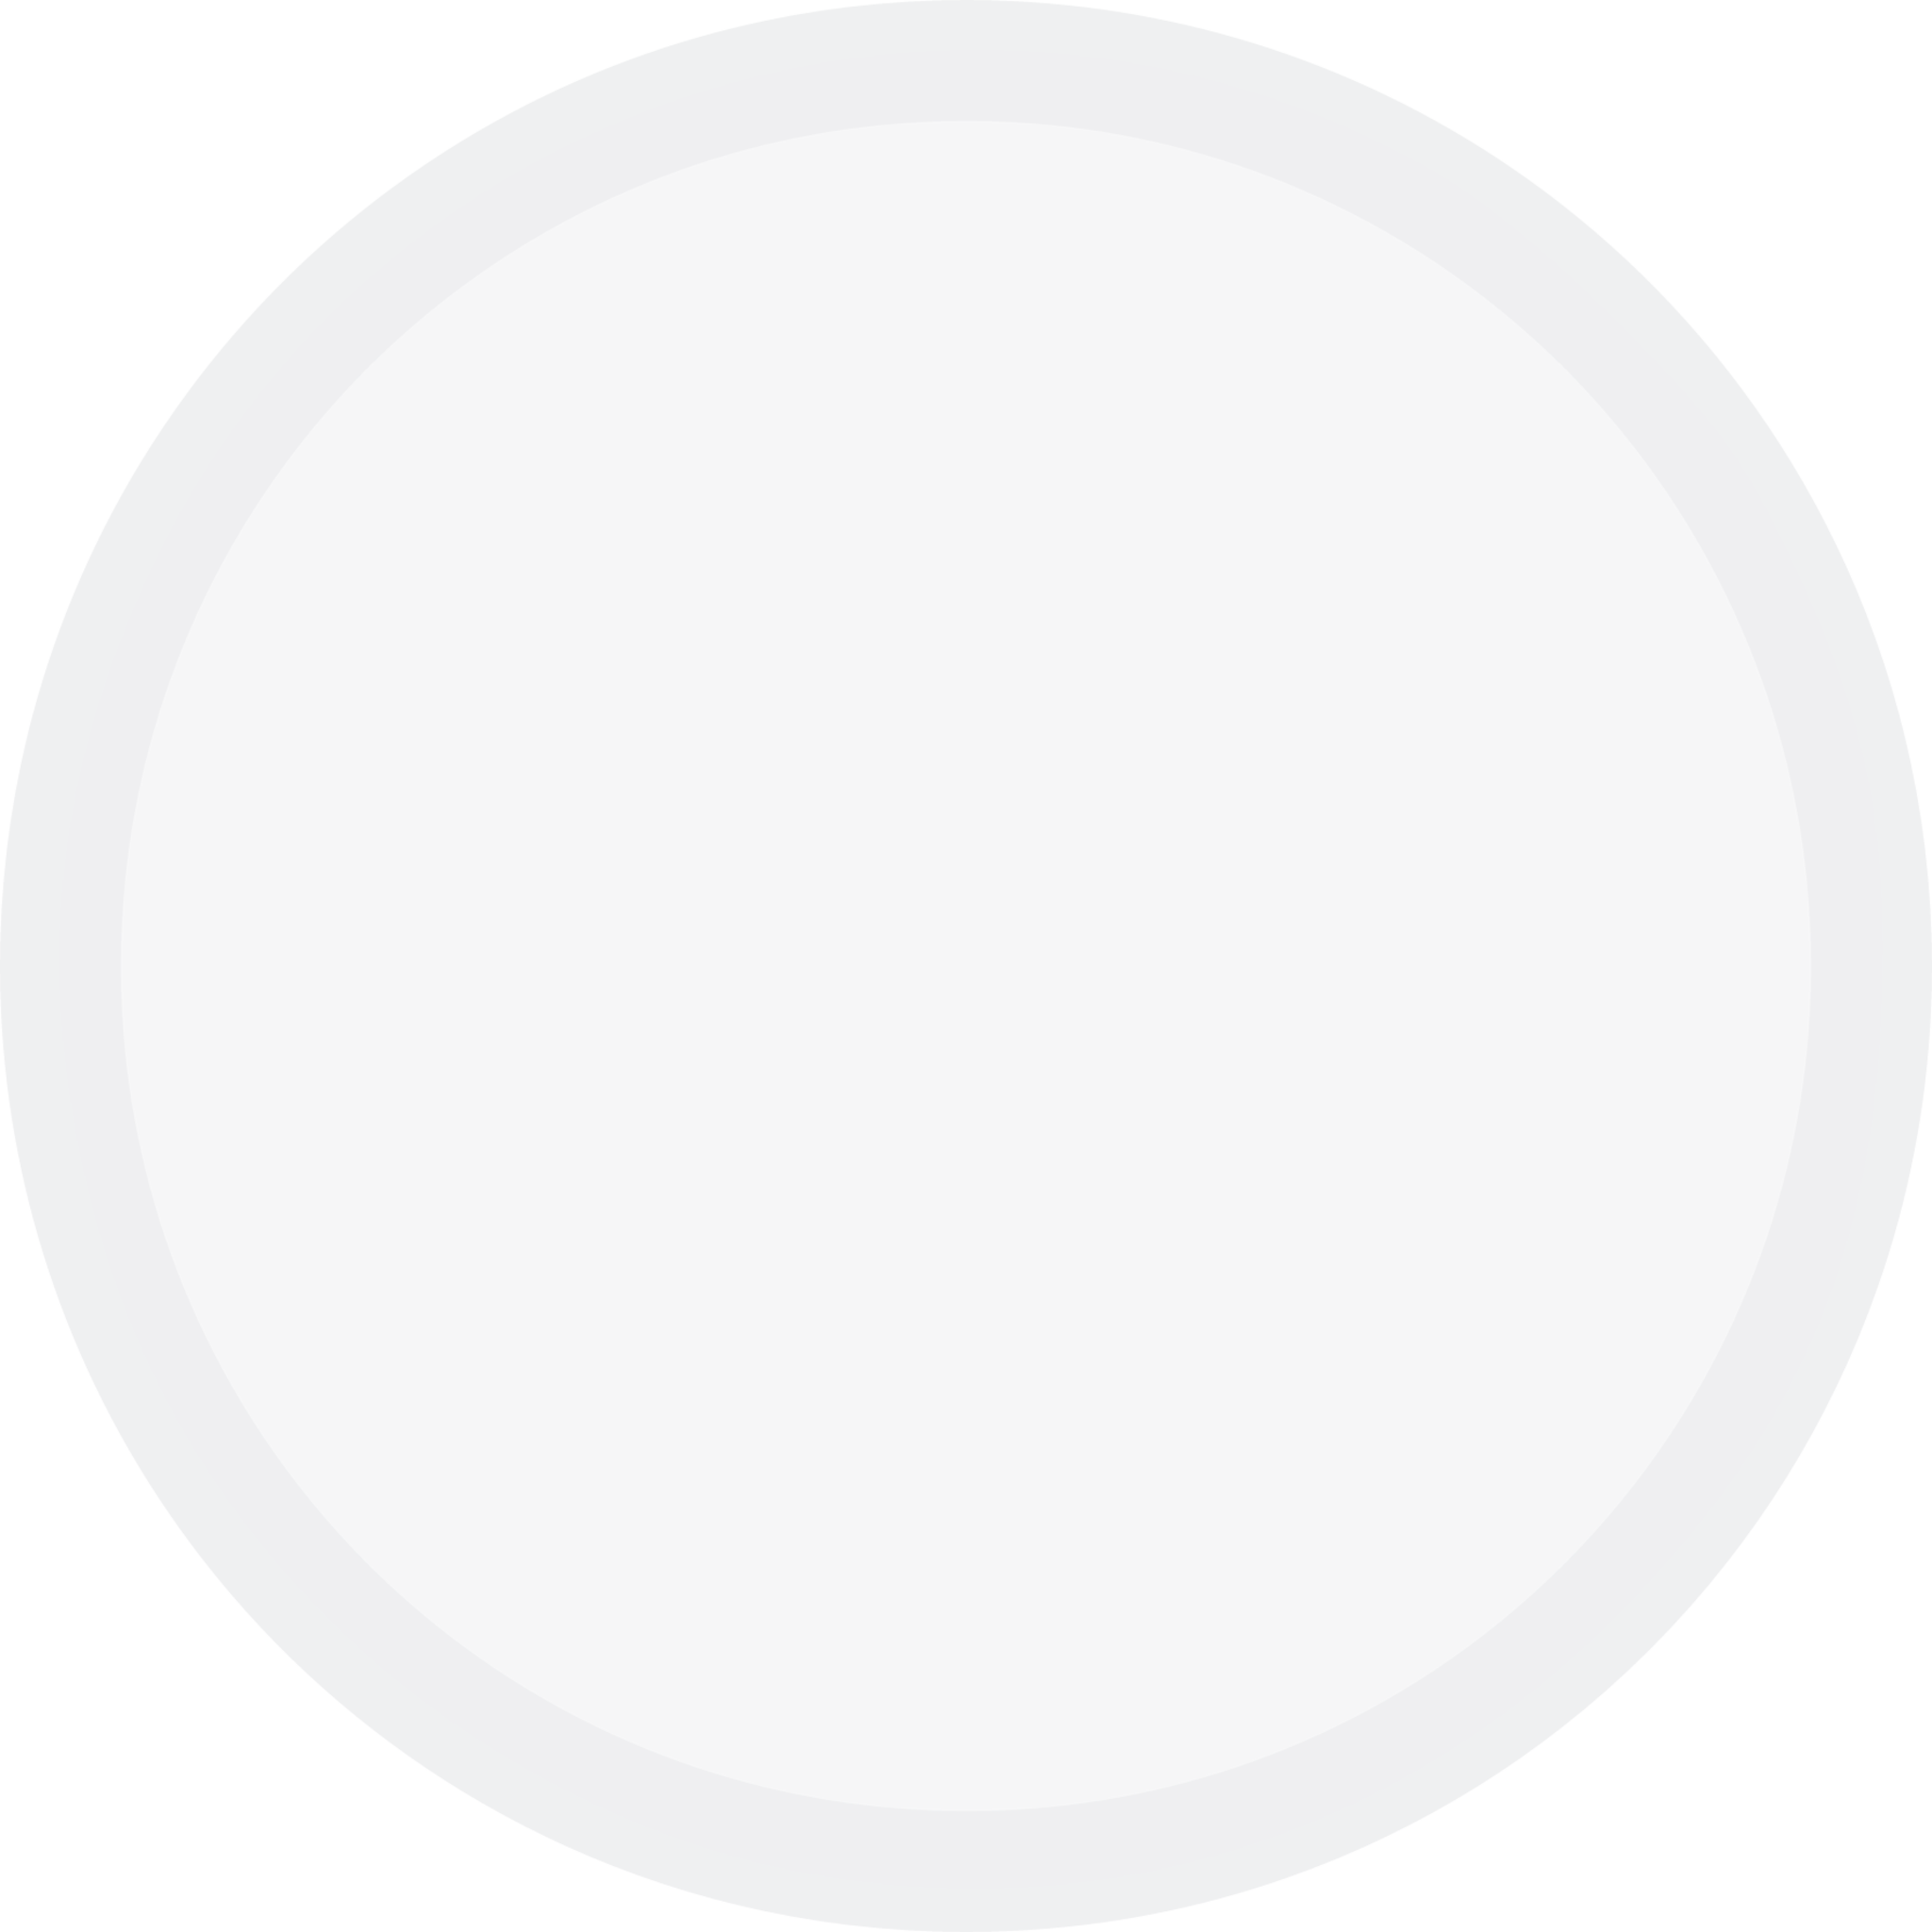 draw circle icon